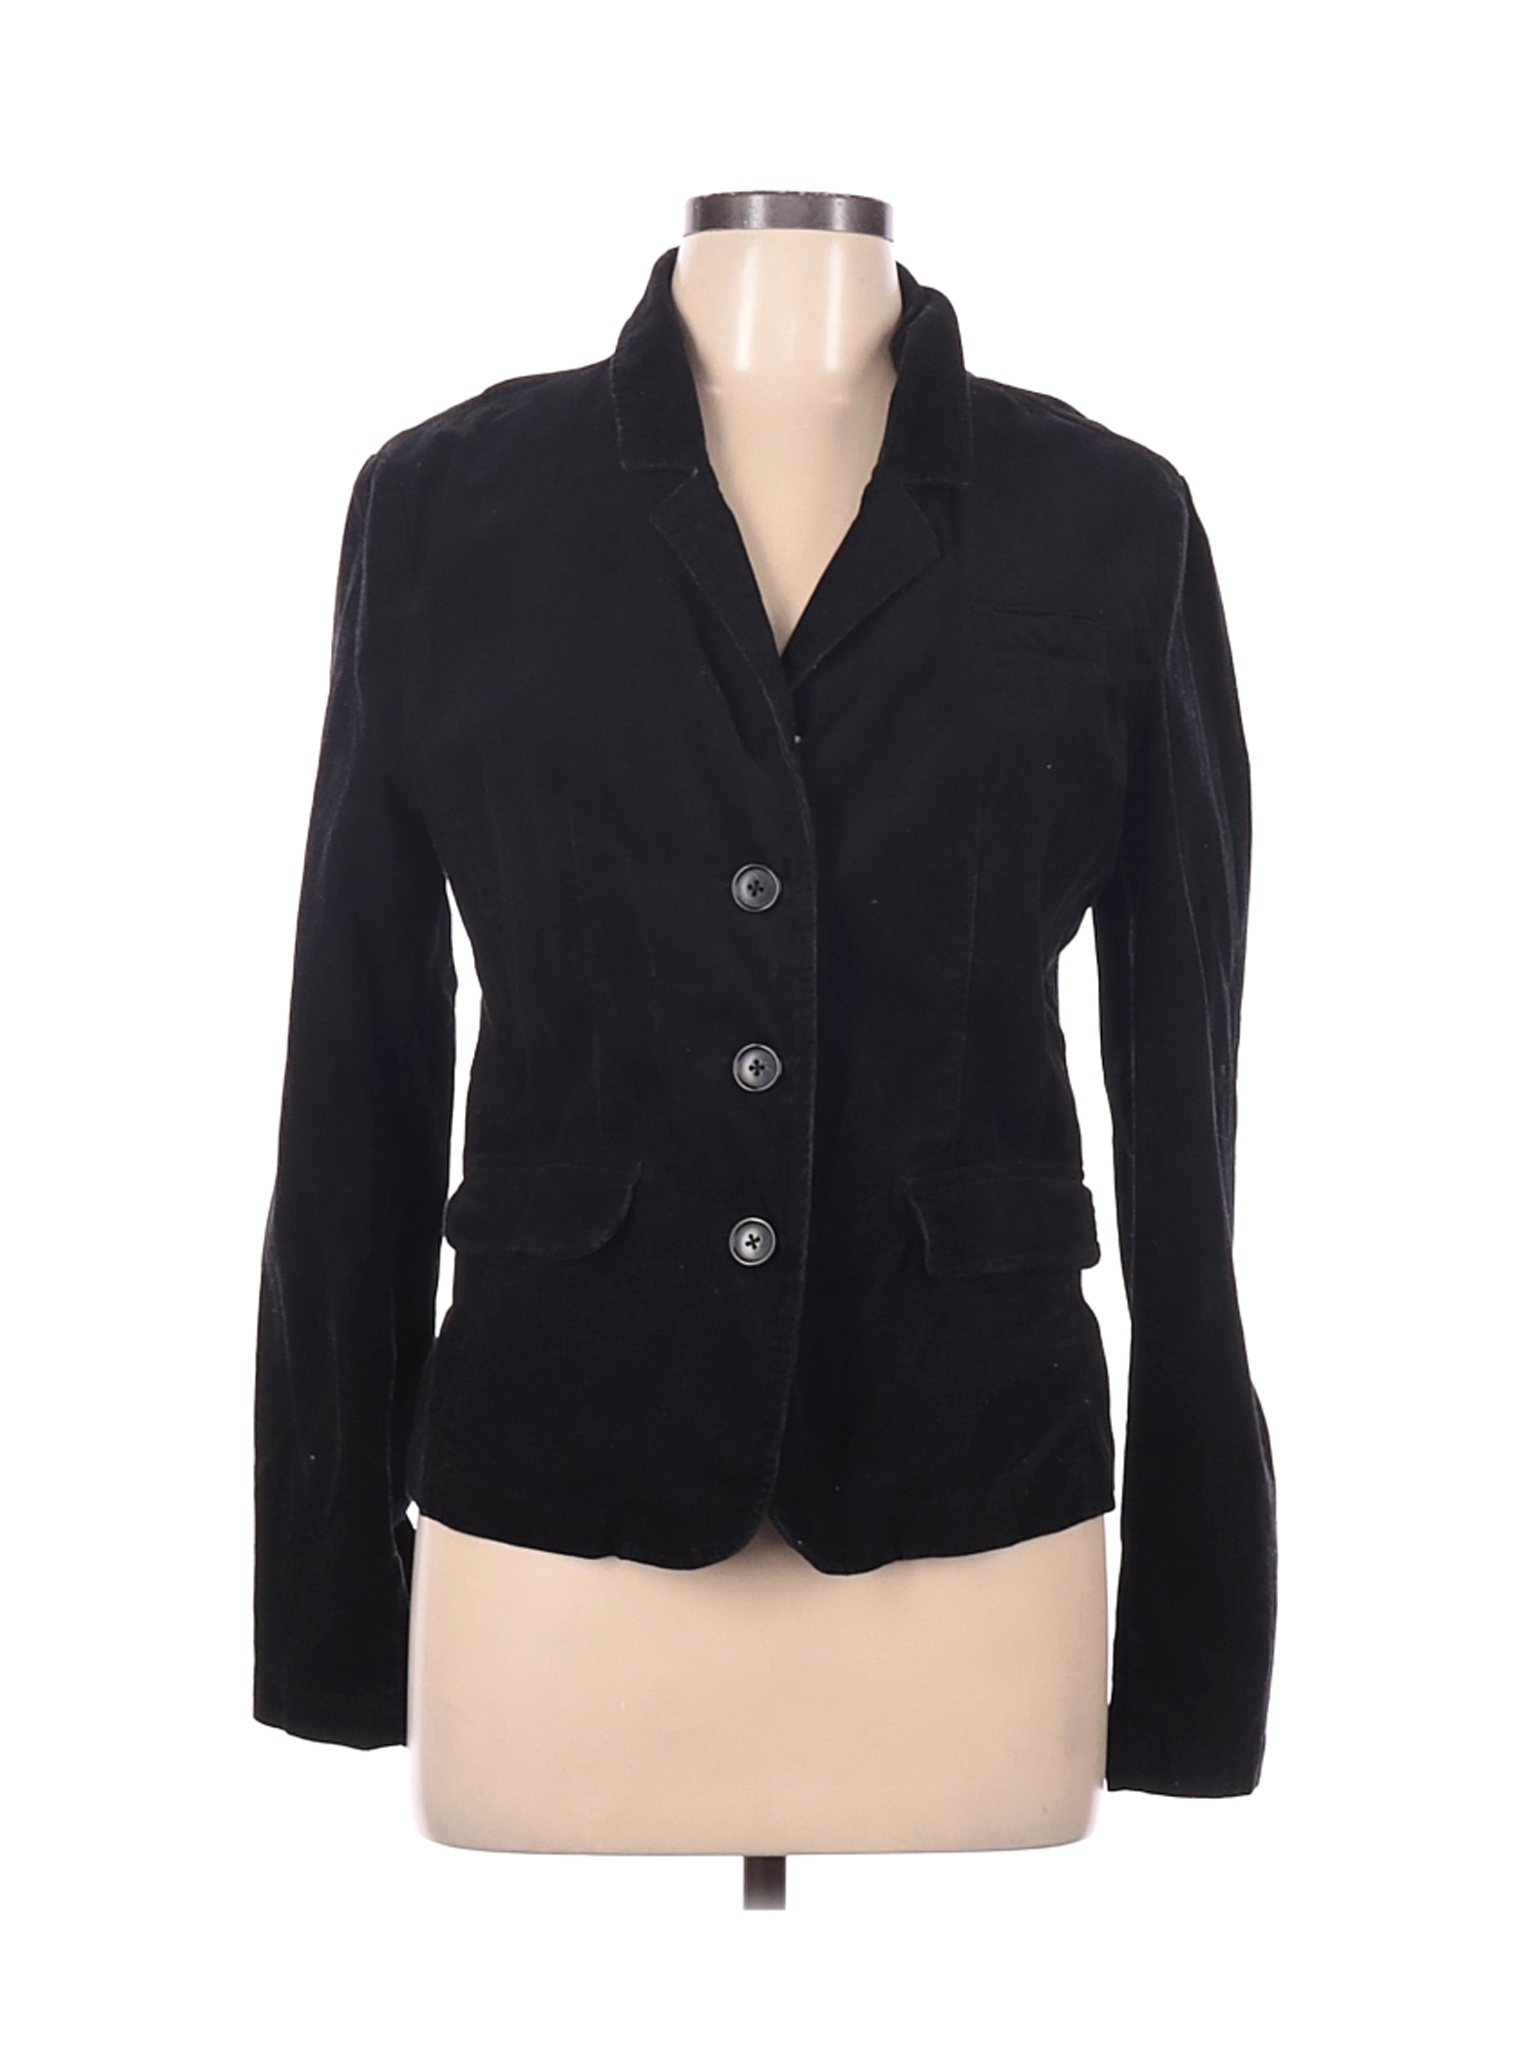 Old Navy Women Black Jacket L | eBay